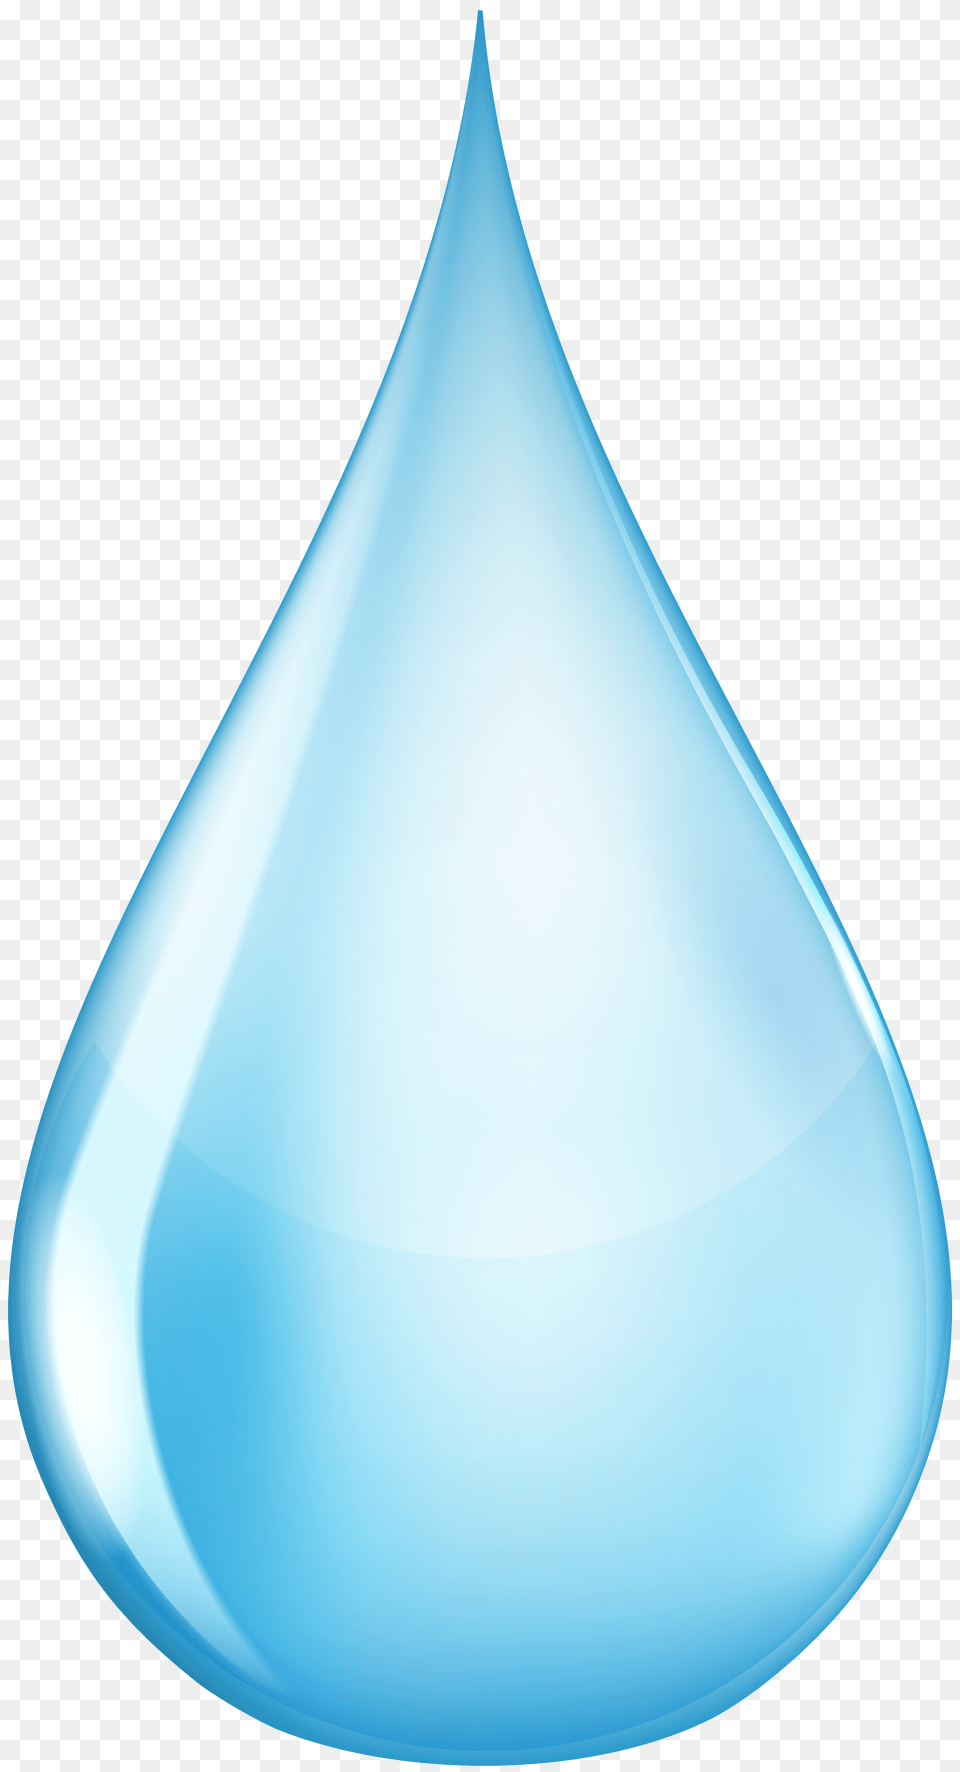 Water Drop Clip, Droplet Png